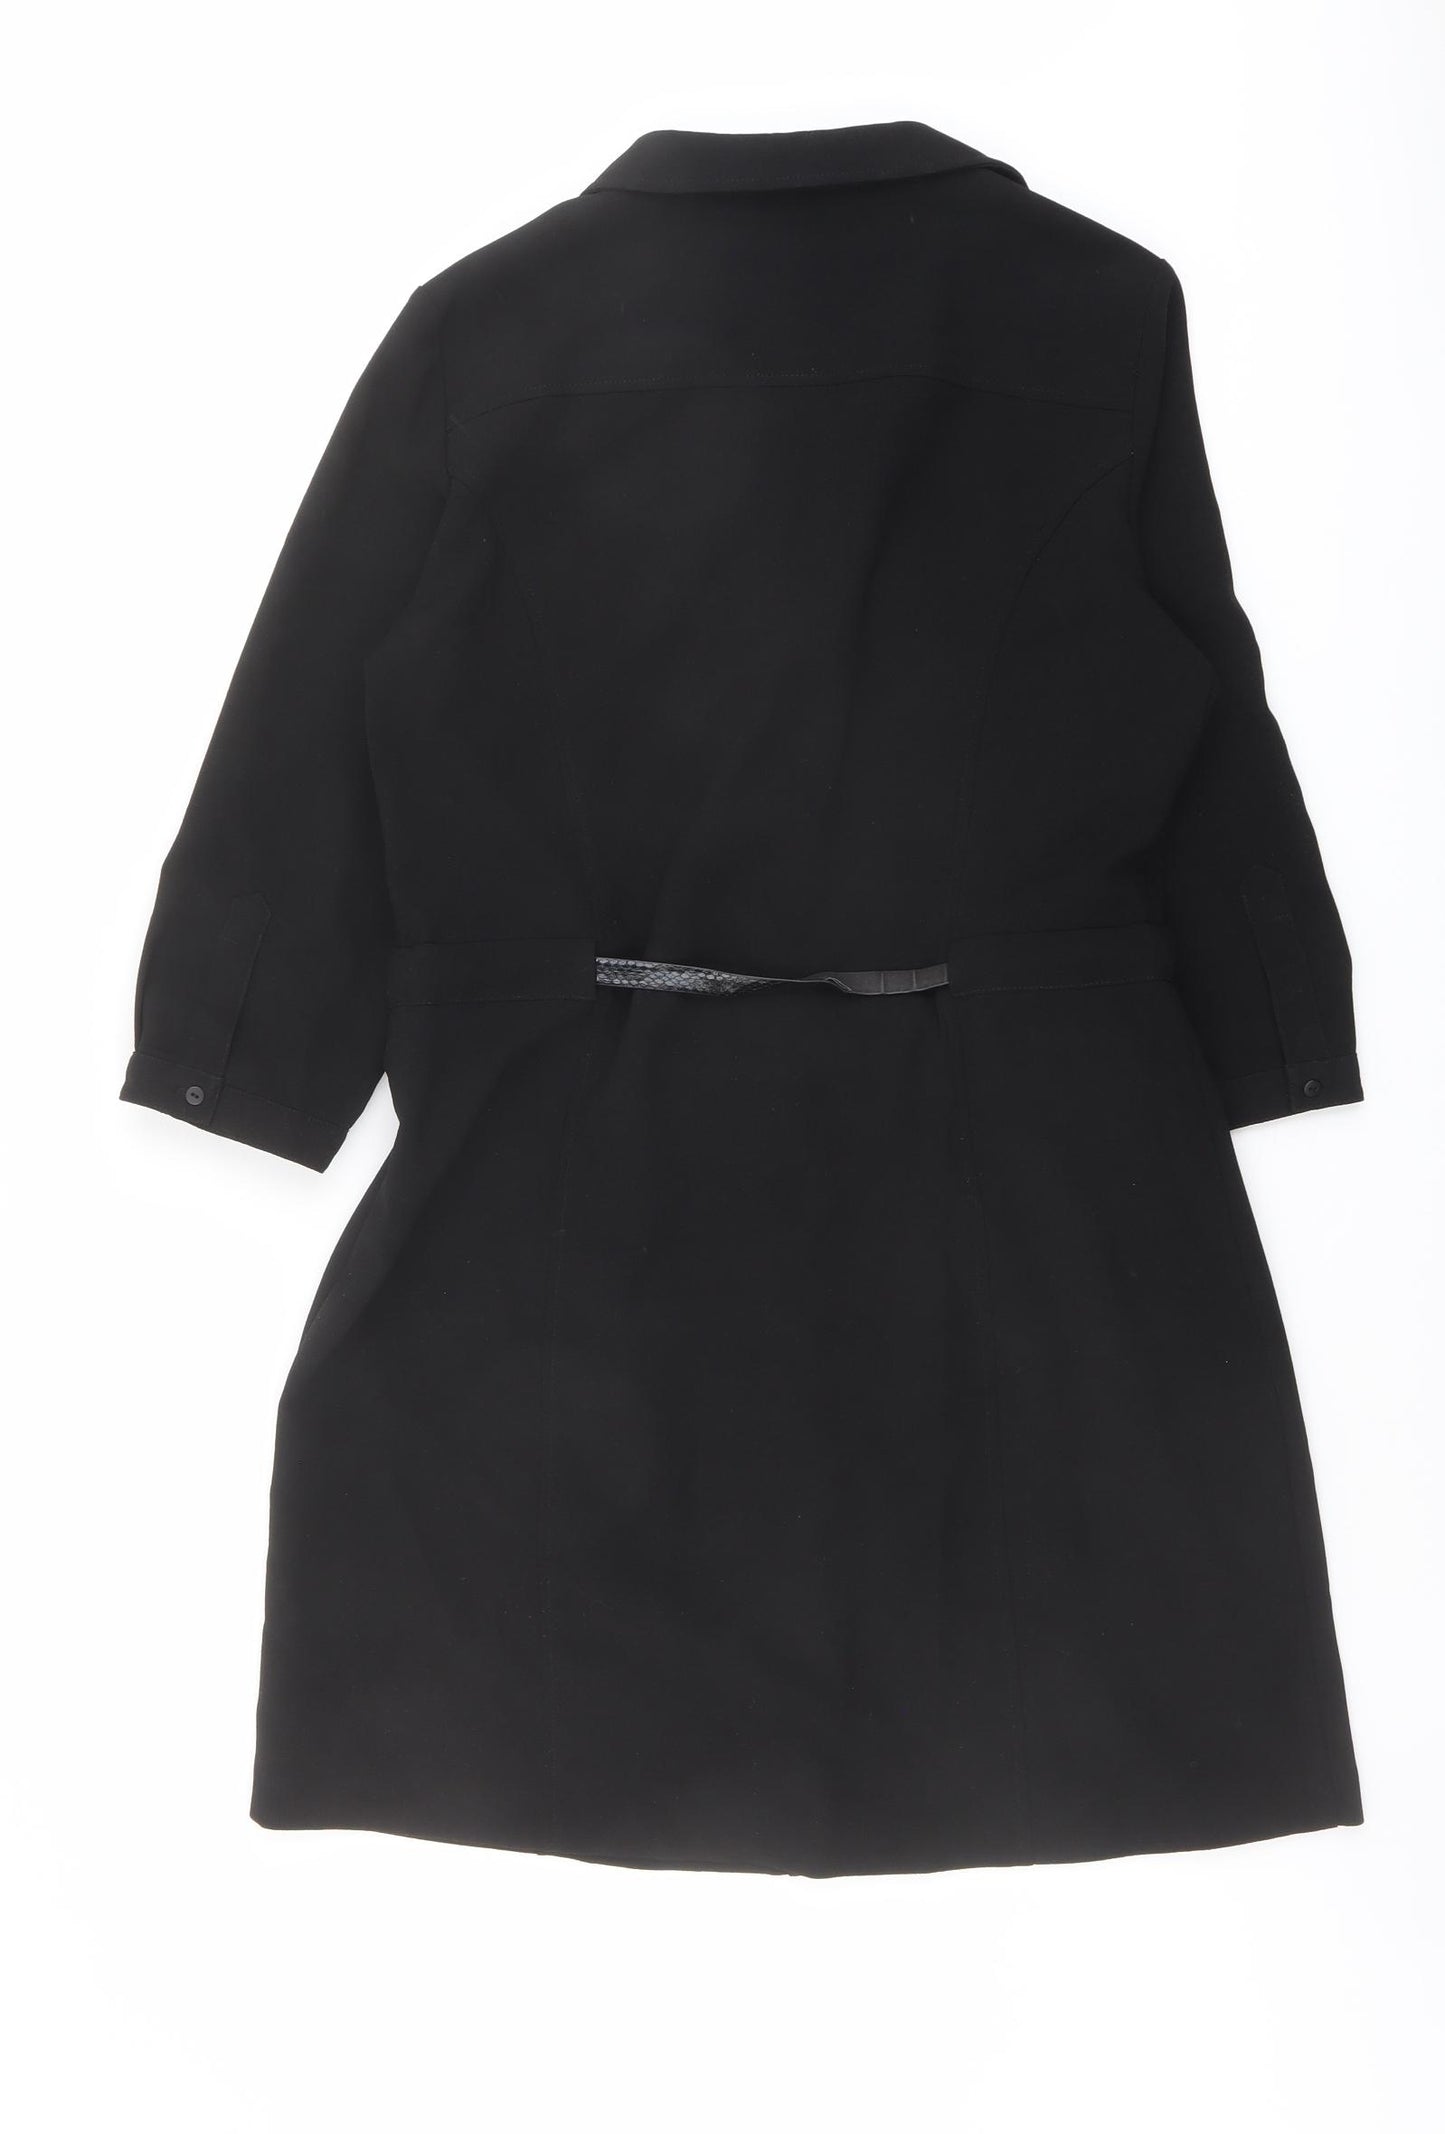 Mango Womens Black Polyester Shirt Dress Size L Collared Button